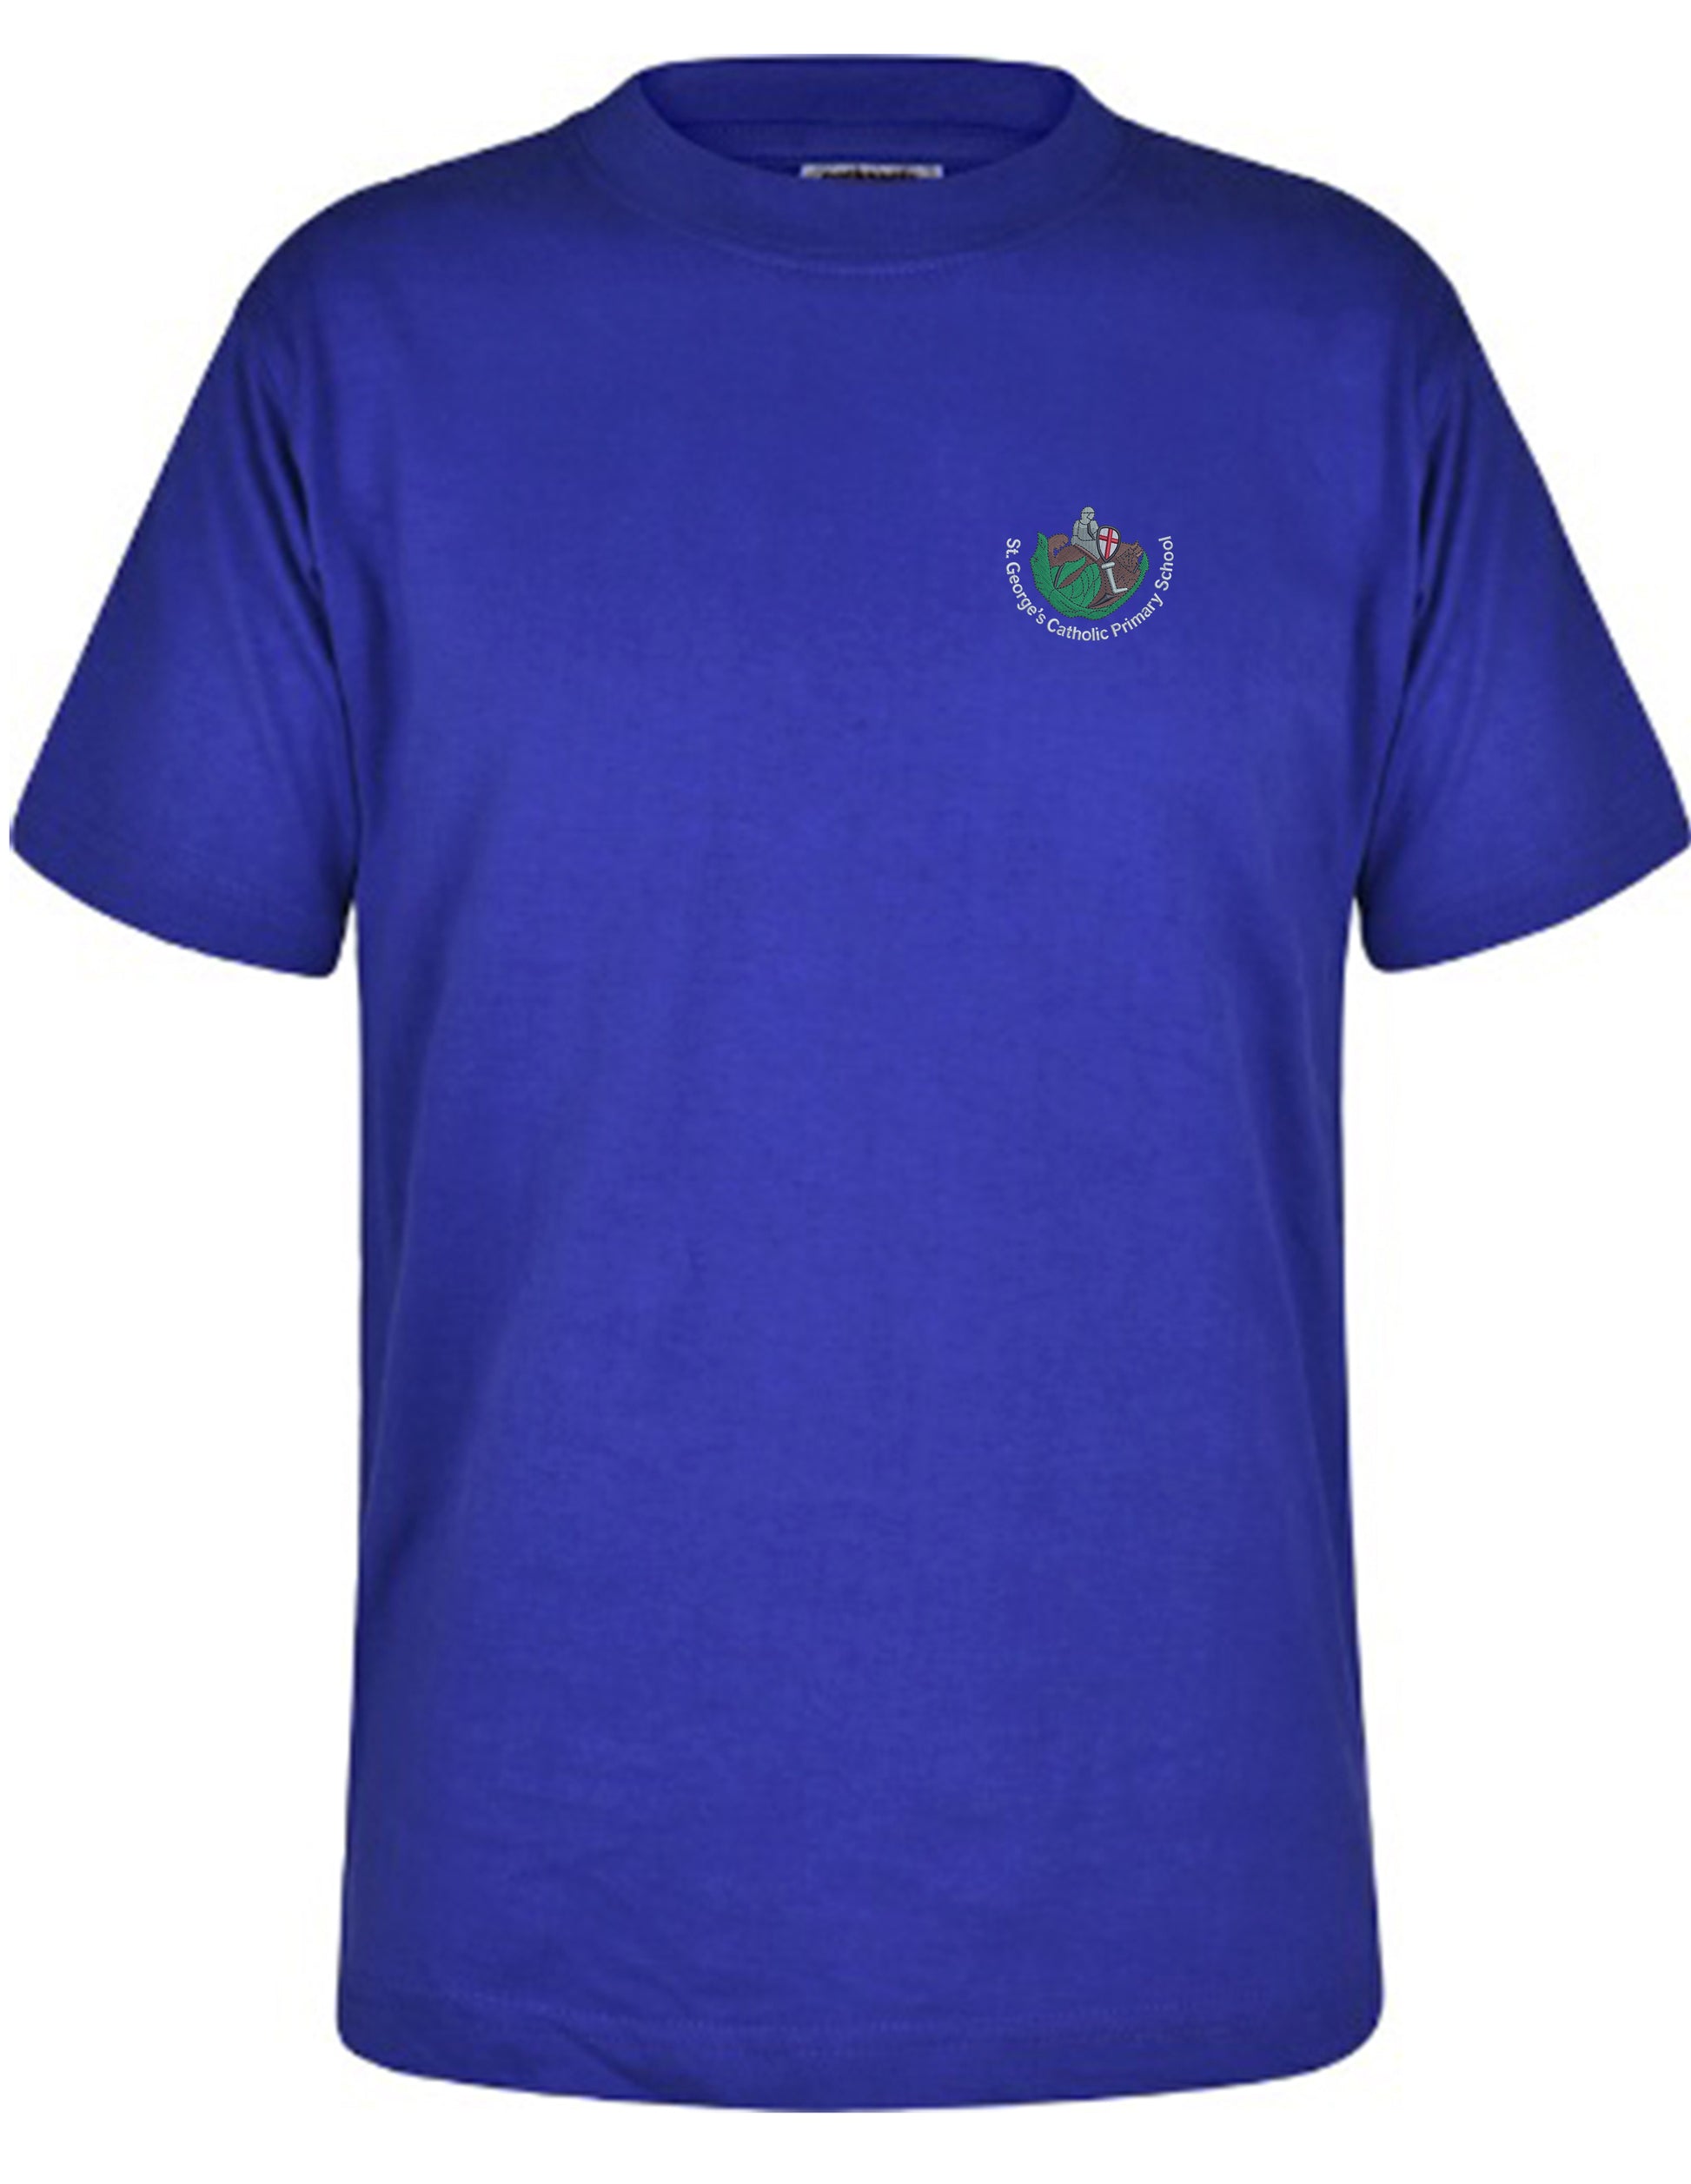 St George's Catholic Primary Voluntary Academy - Unisex Cotton T-shirt - Royal Blue - School Uniform Shop